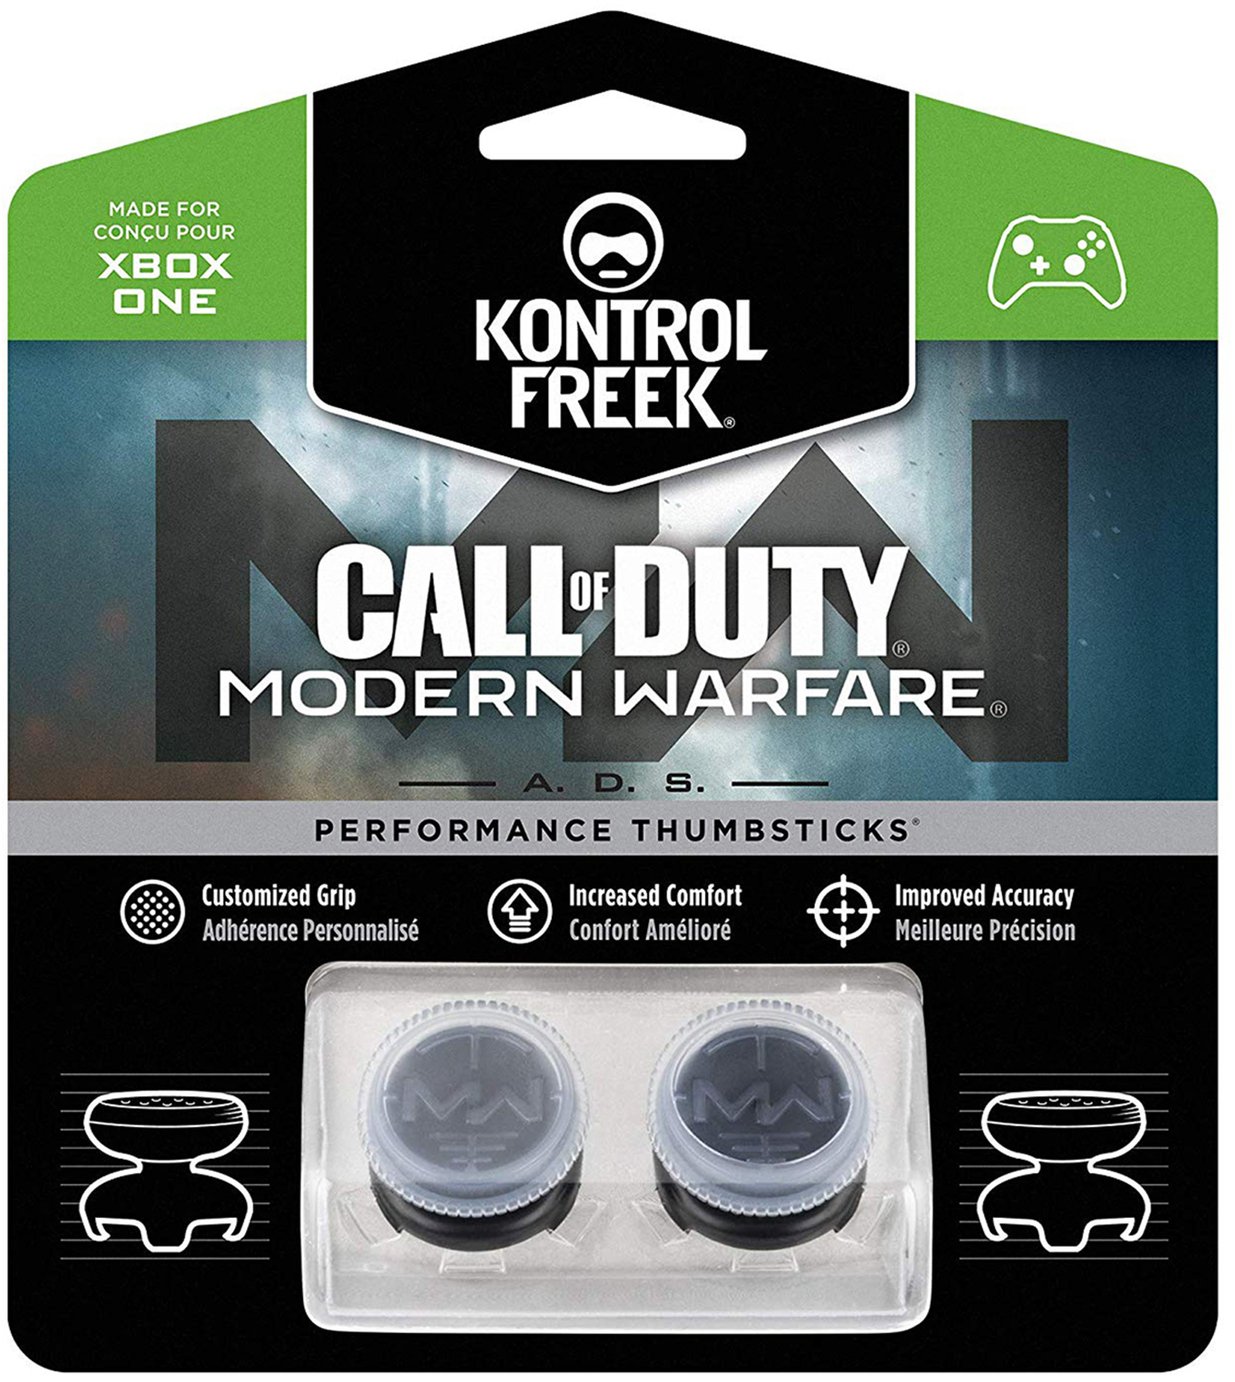 Call of Duty Modern Warfare Xbox One Performance Thumbsticks